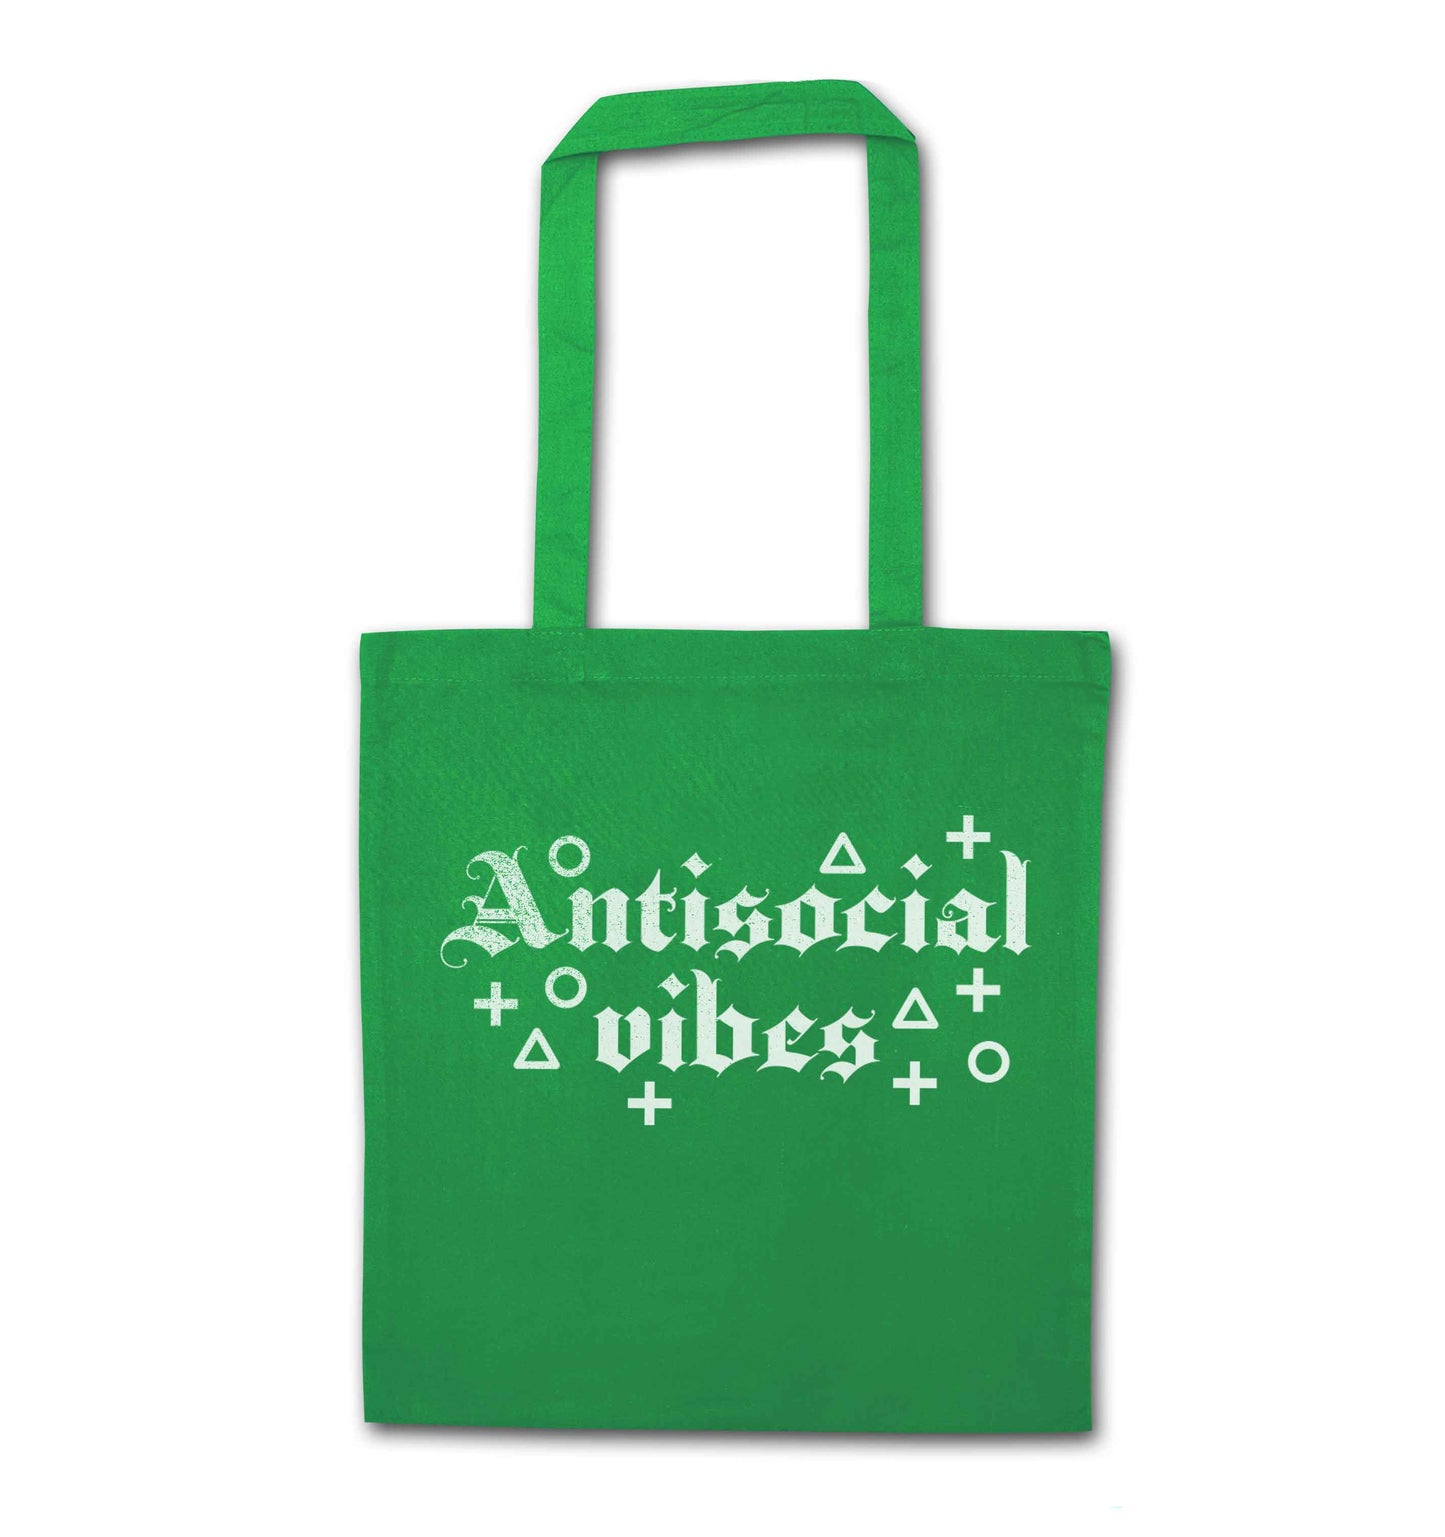 Antisocial vibes green tote bag